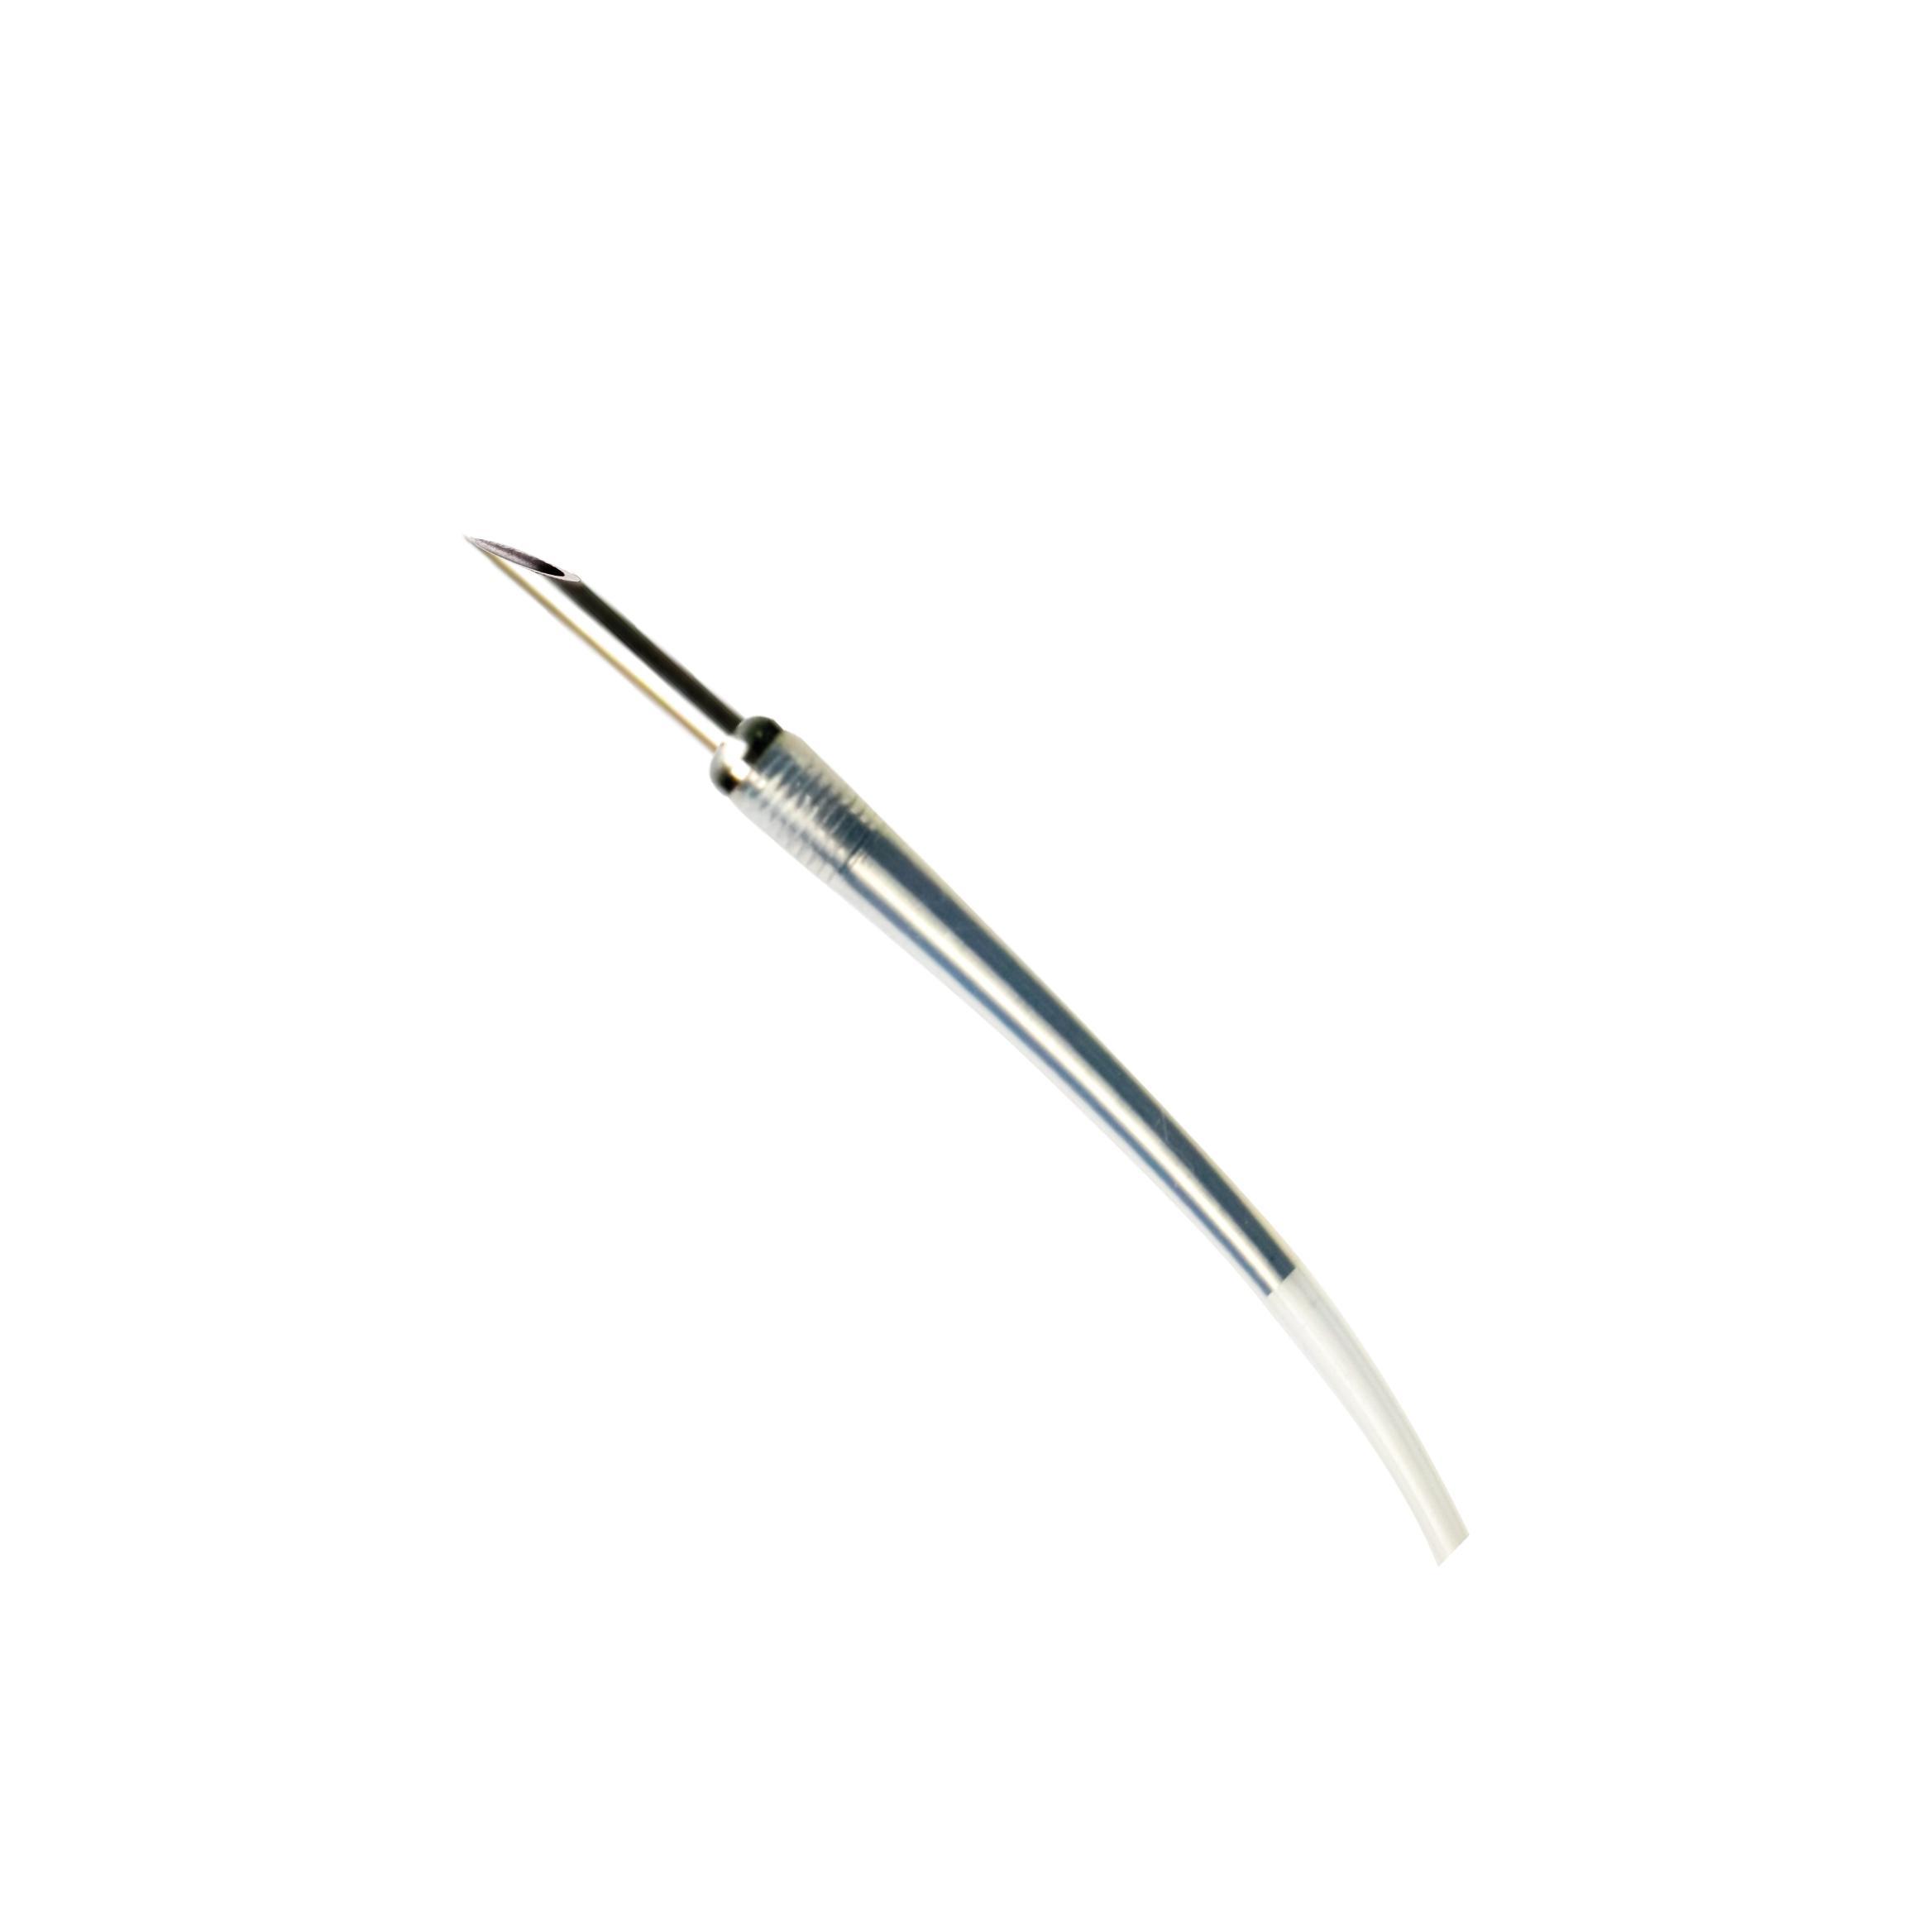 NeoInjection®, injection needle